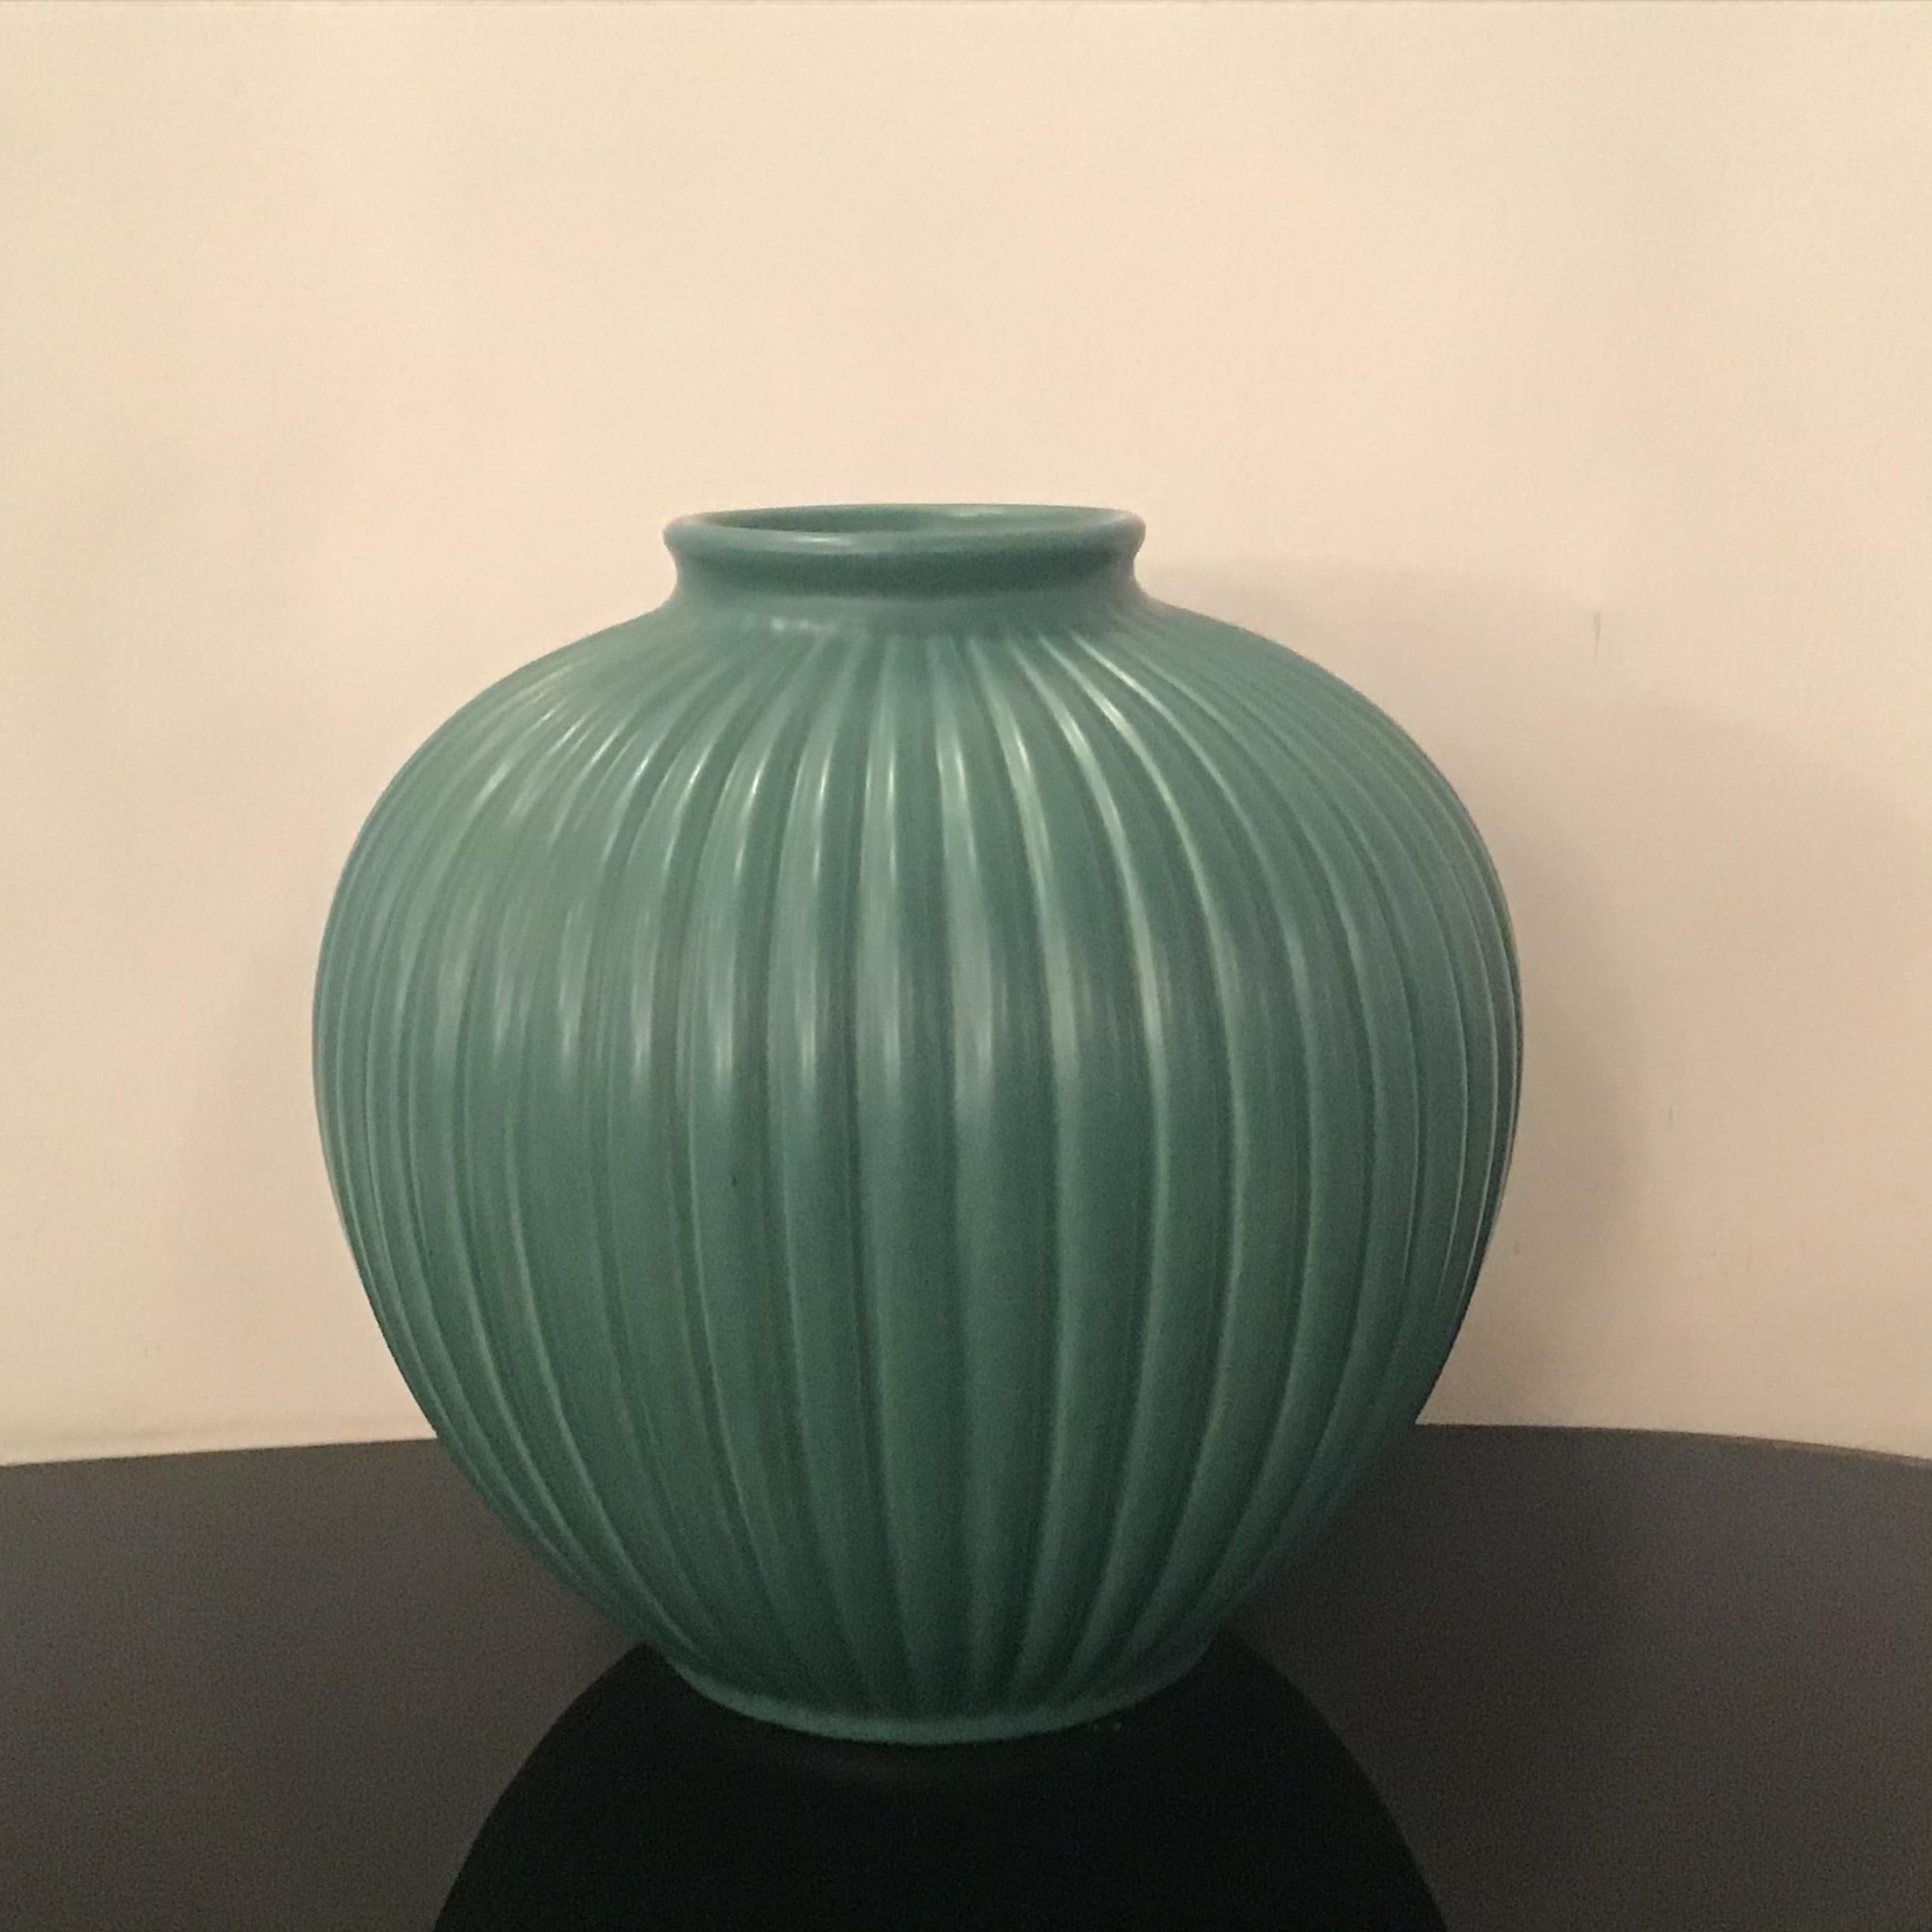 Richard Ginori Giovanni Gariboldi Pair of Vases Green Ceramic 1950 Italy For Sale 2